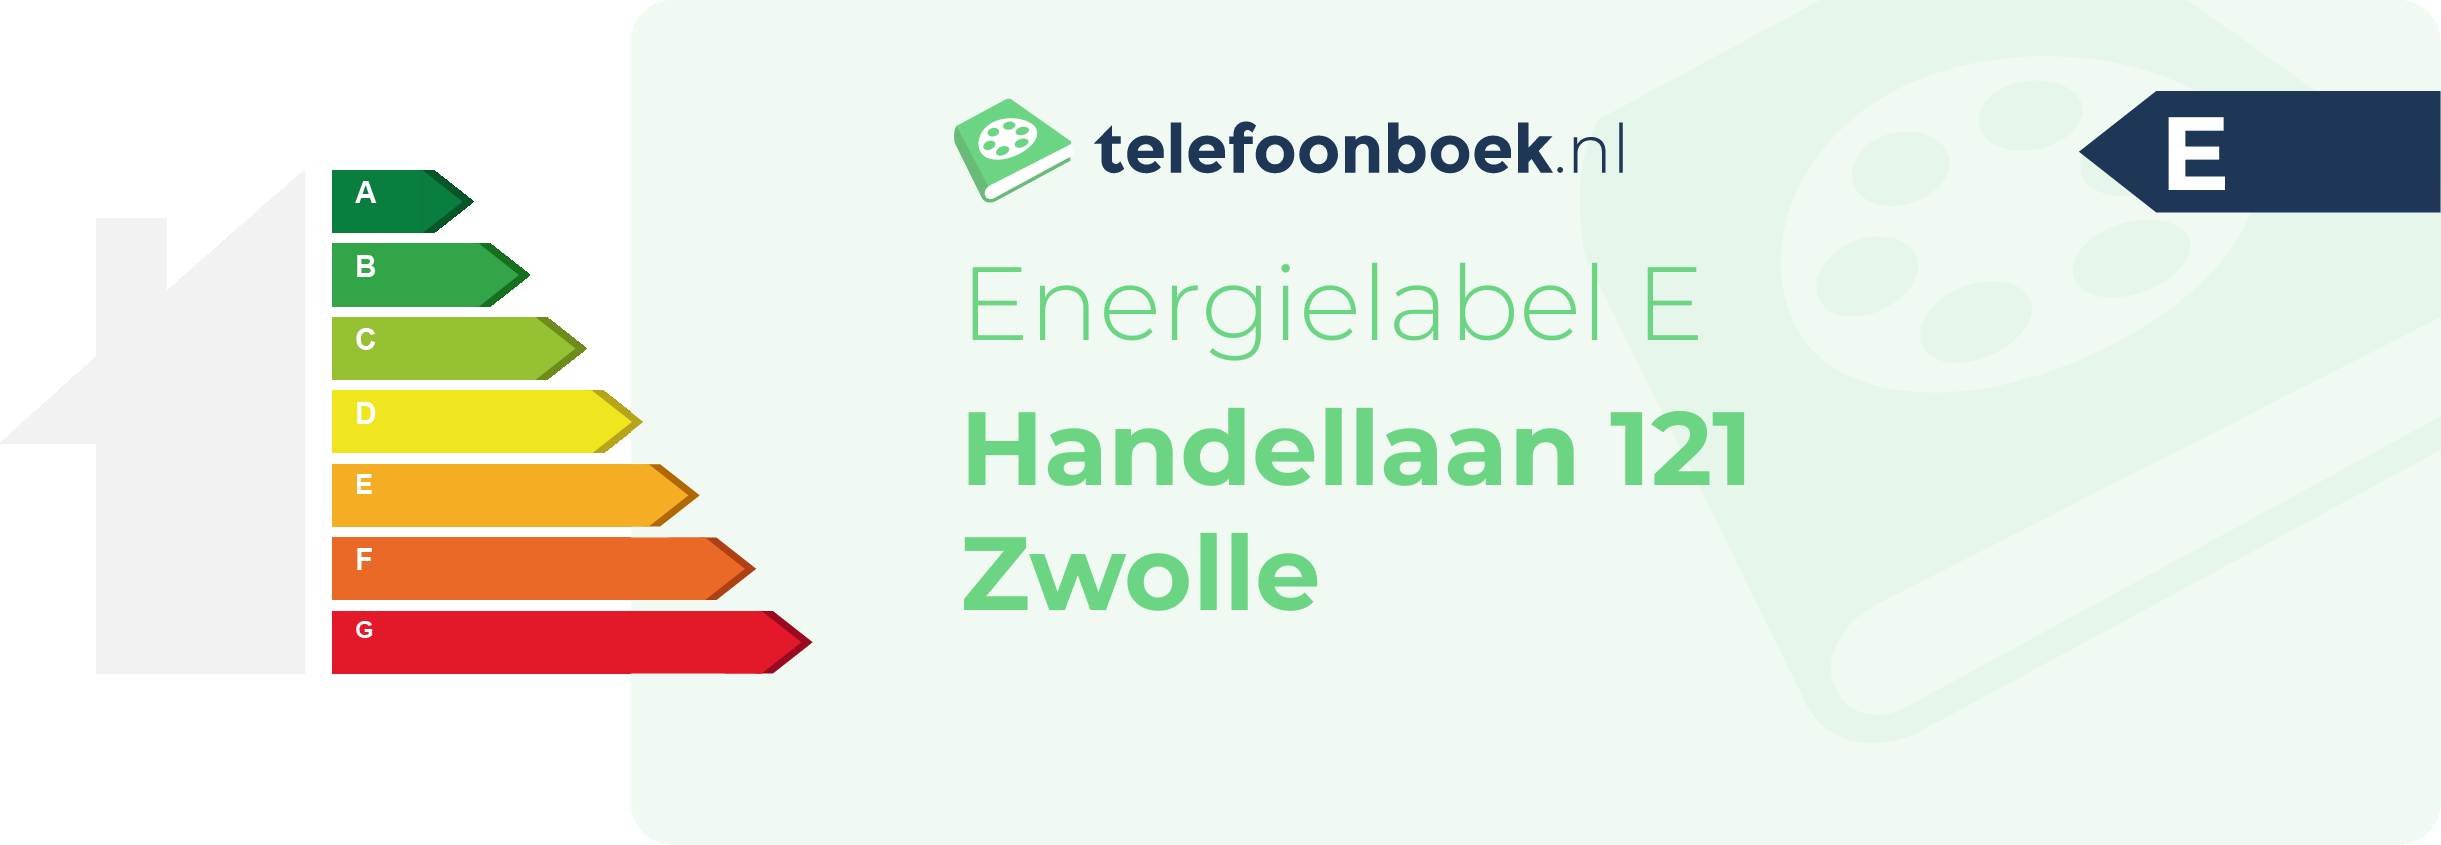 Energielabel Handellaan 121 Zwolle